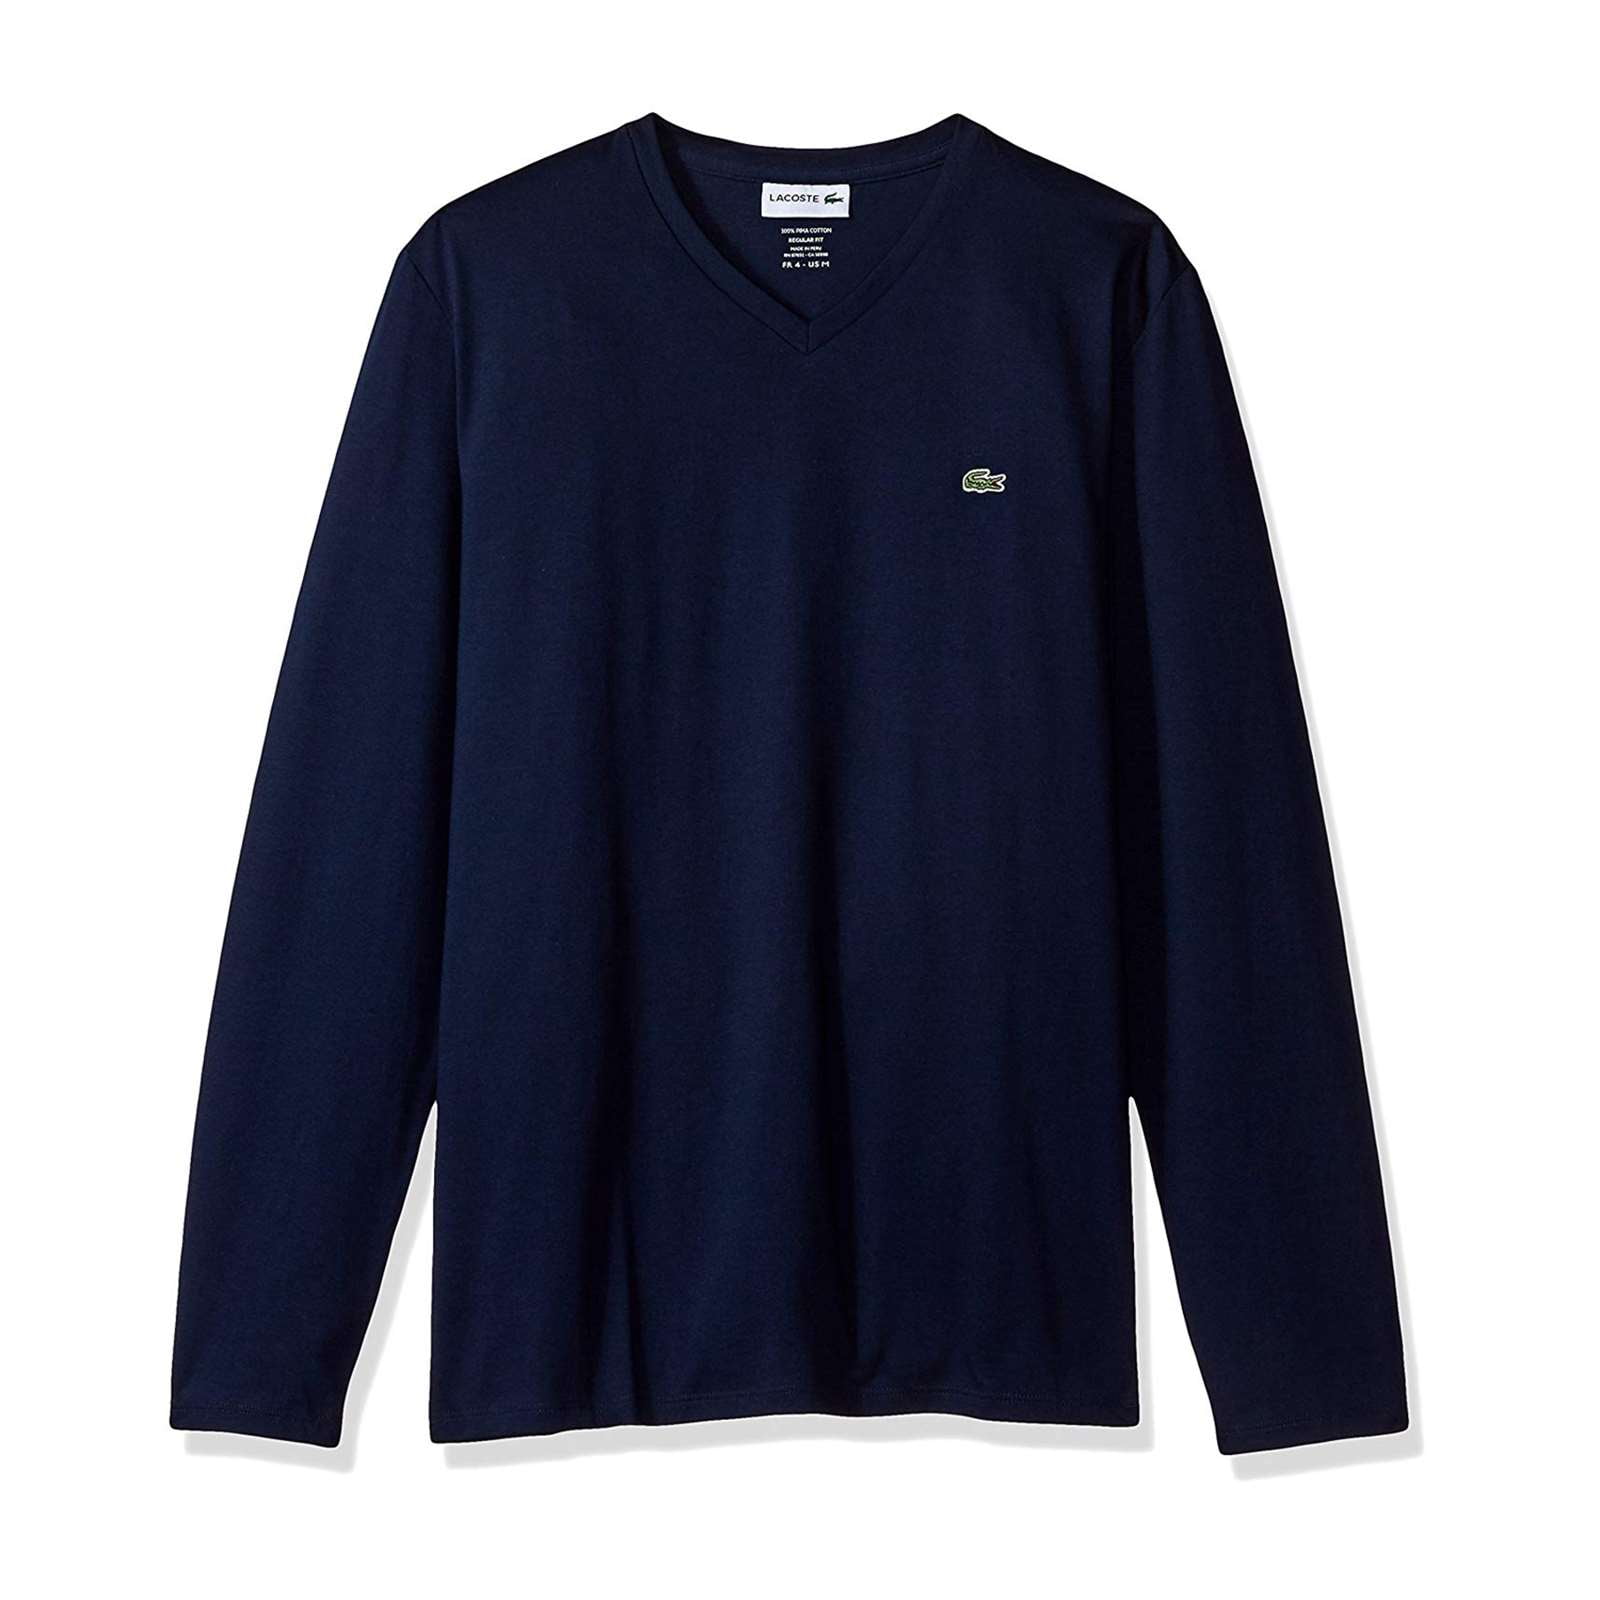 Et bestemt Spytte ud Menagerry Lacoste Men's Long Sleeve 100% Pima Cotton V-Neck T-Shirt Basic Tee -  Walmart.com